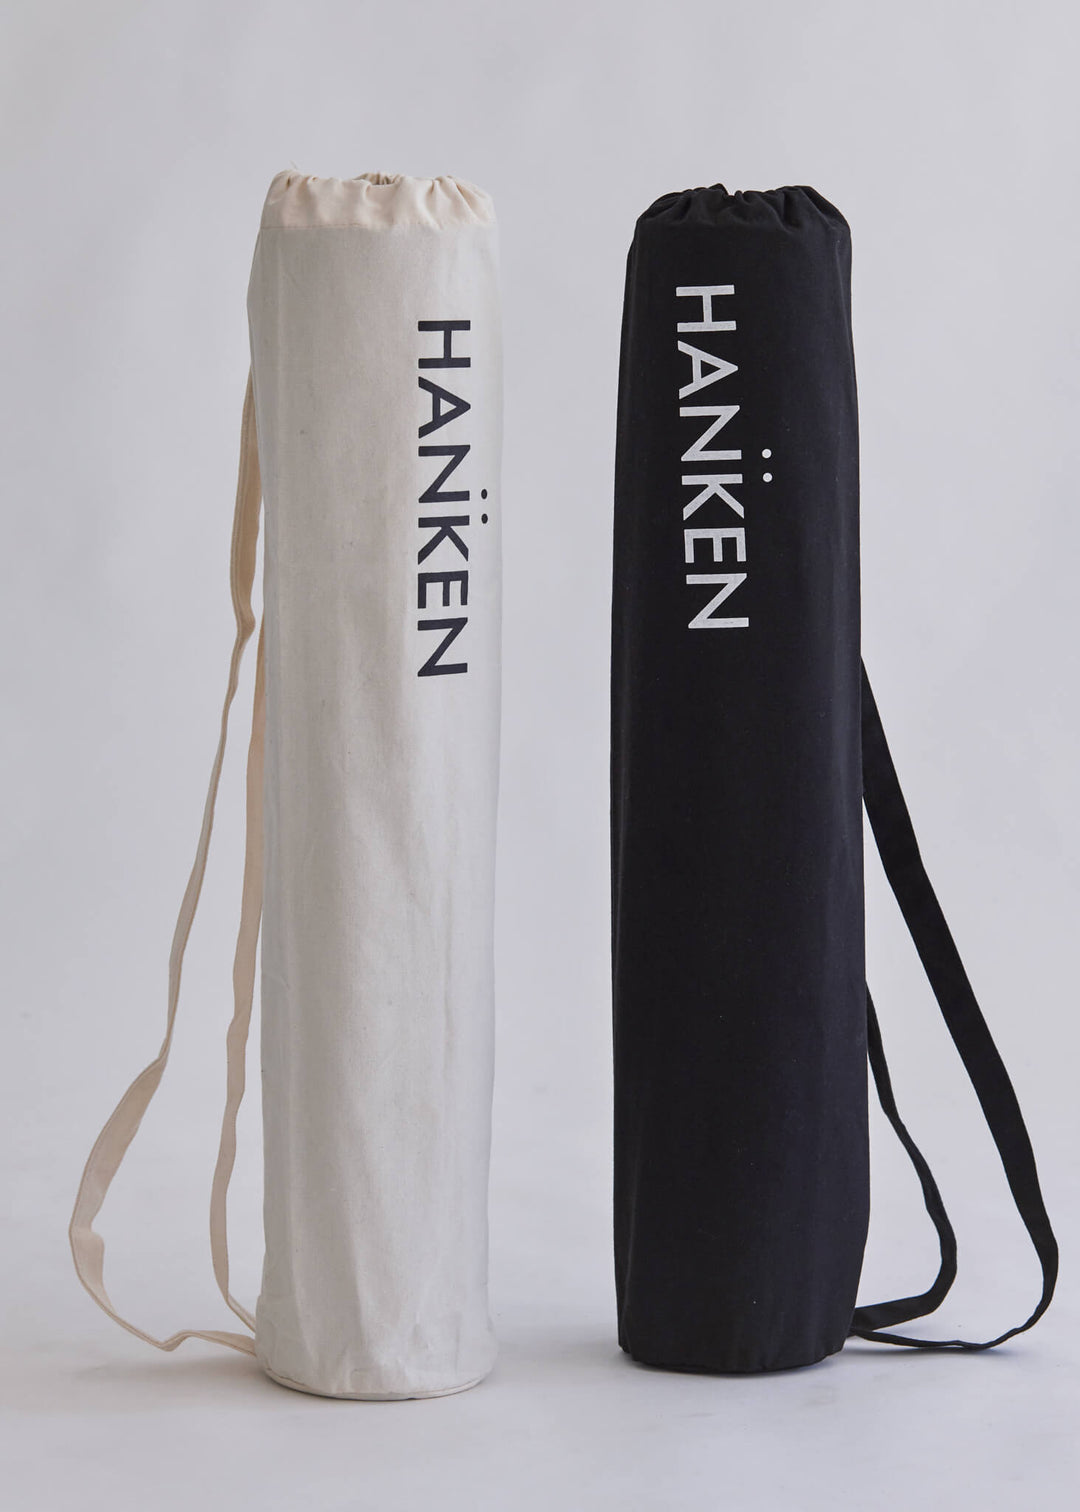 Good Quality Yoga Mat Bag Eco Friendly Cotton Canvas Yoga Bag Custom Logo -  China Canvas Bag and Tote Bag price